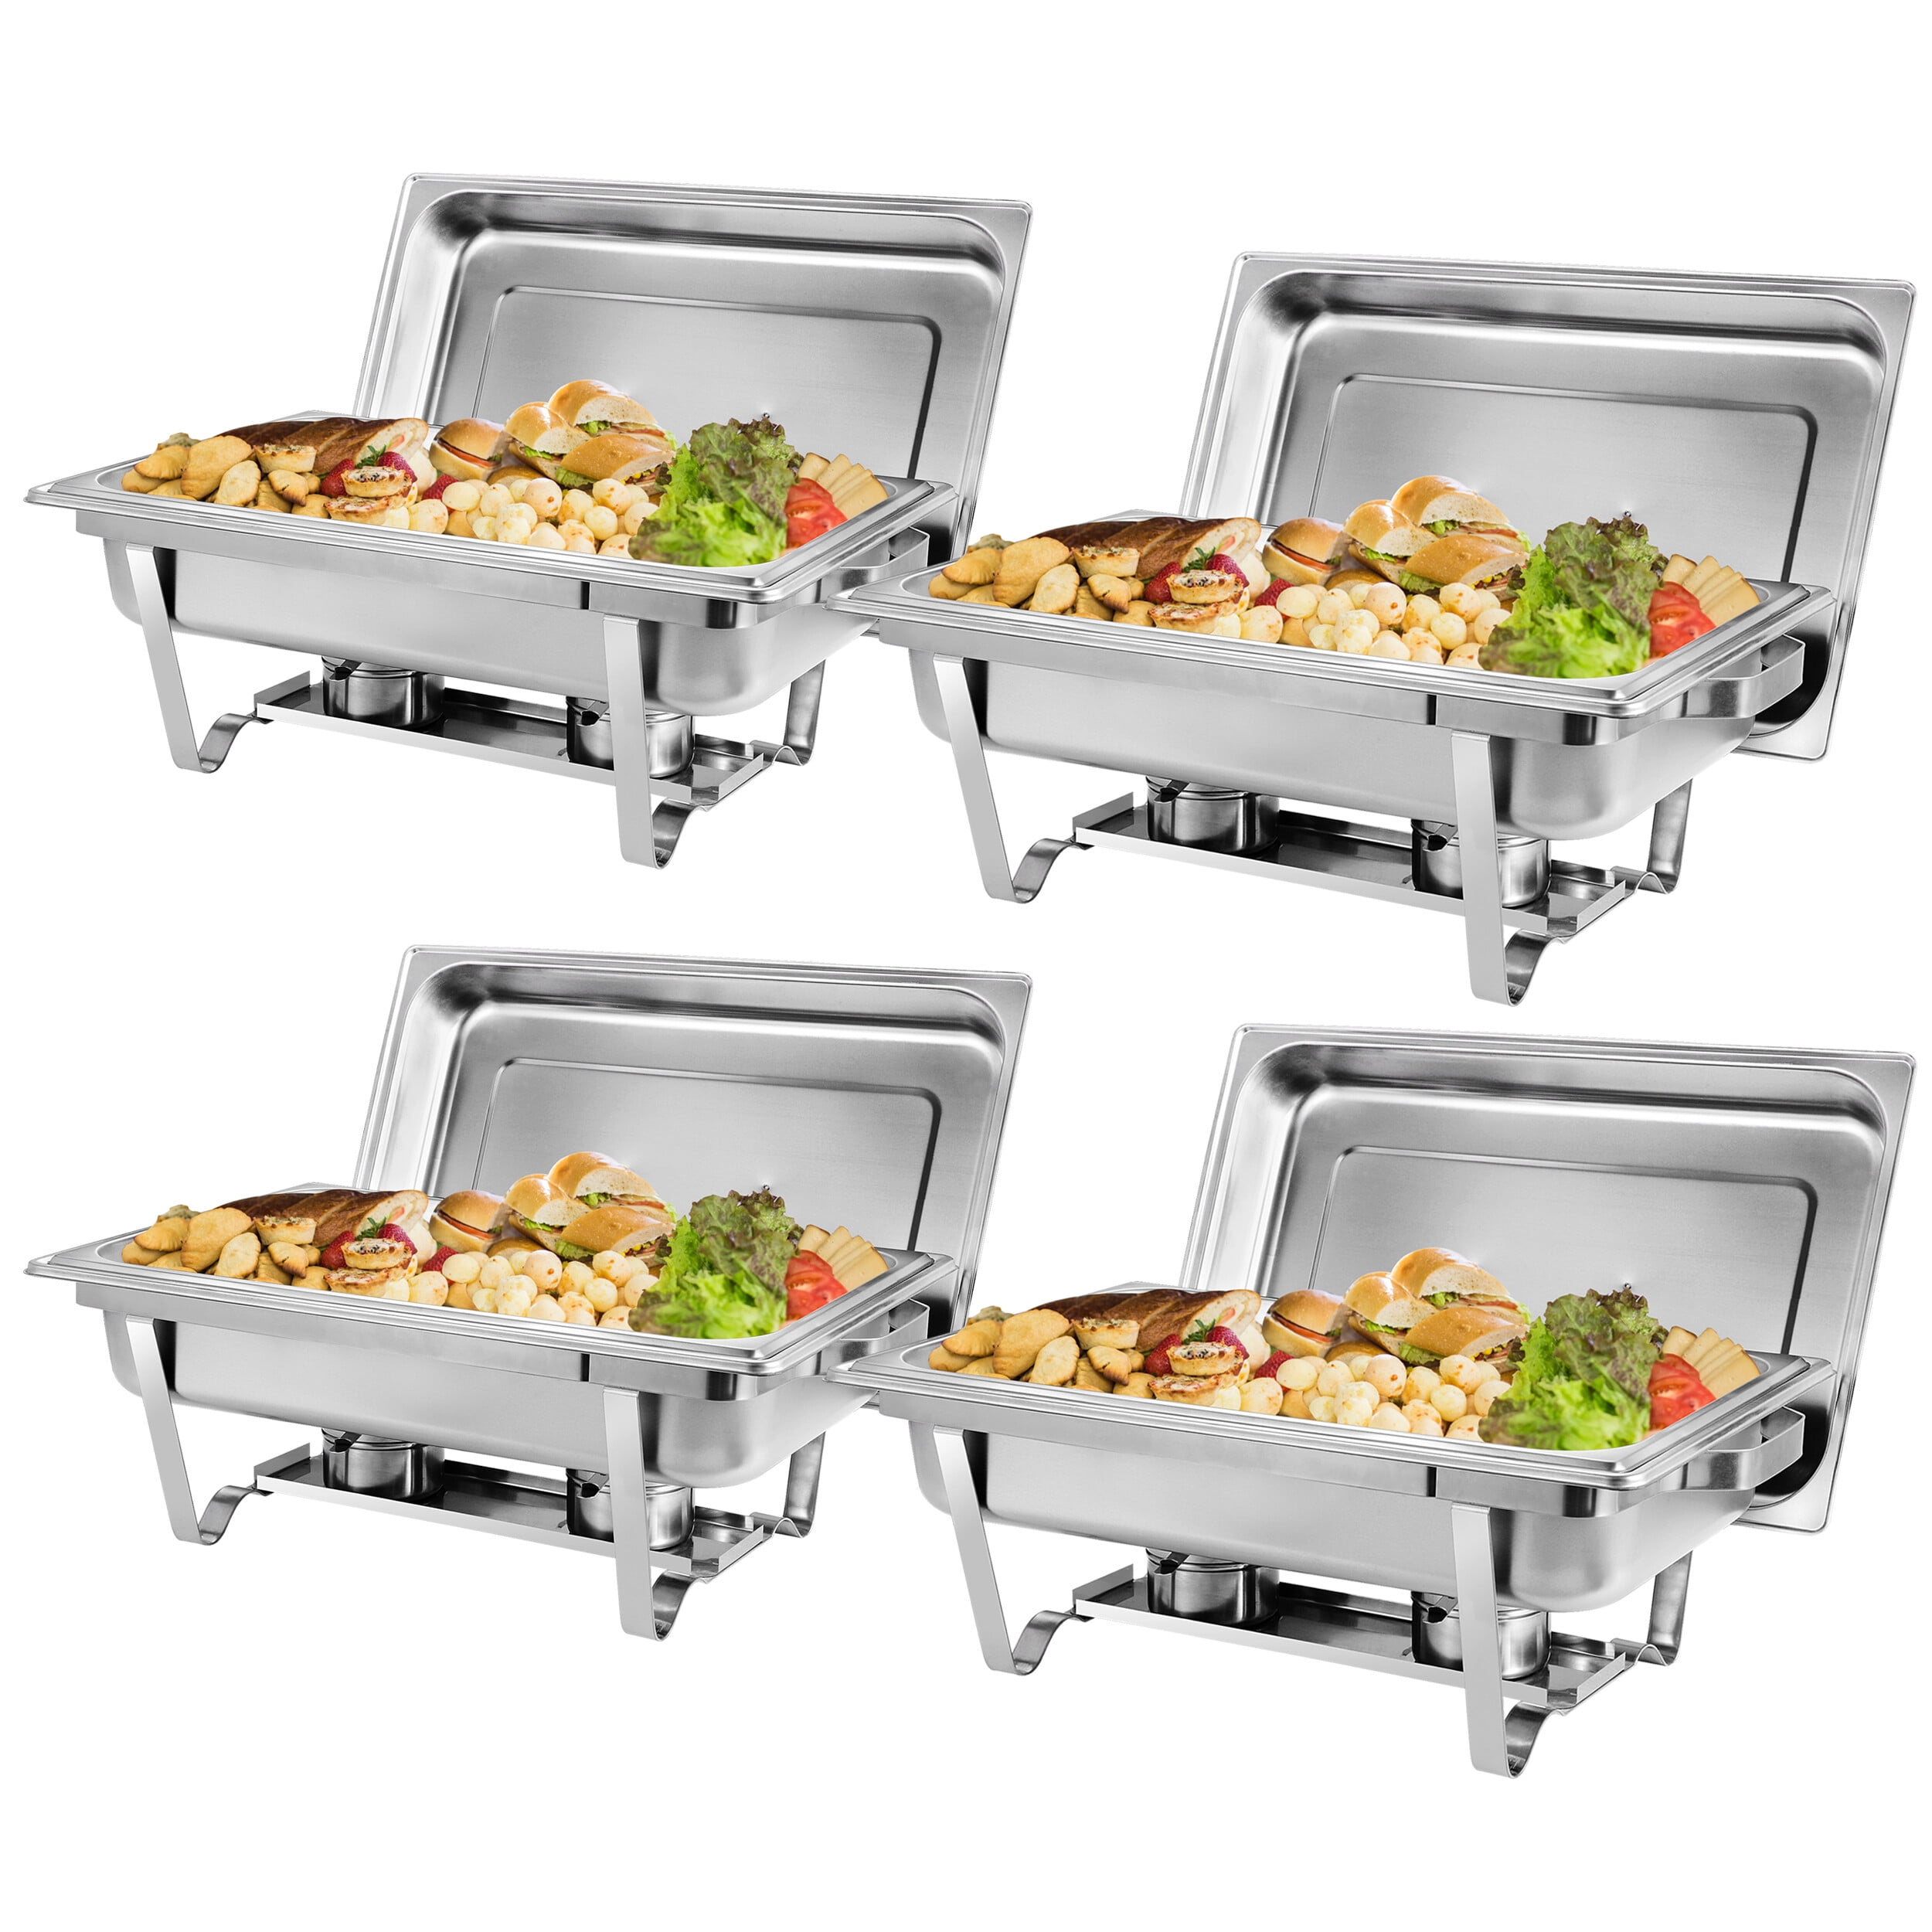 Chafing Dish - Deniza Luxury Scroll Buffet Server 8 QT Party Food Warmer